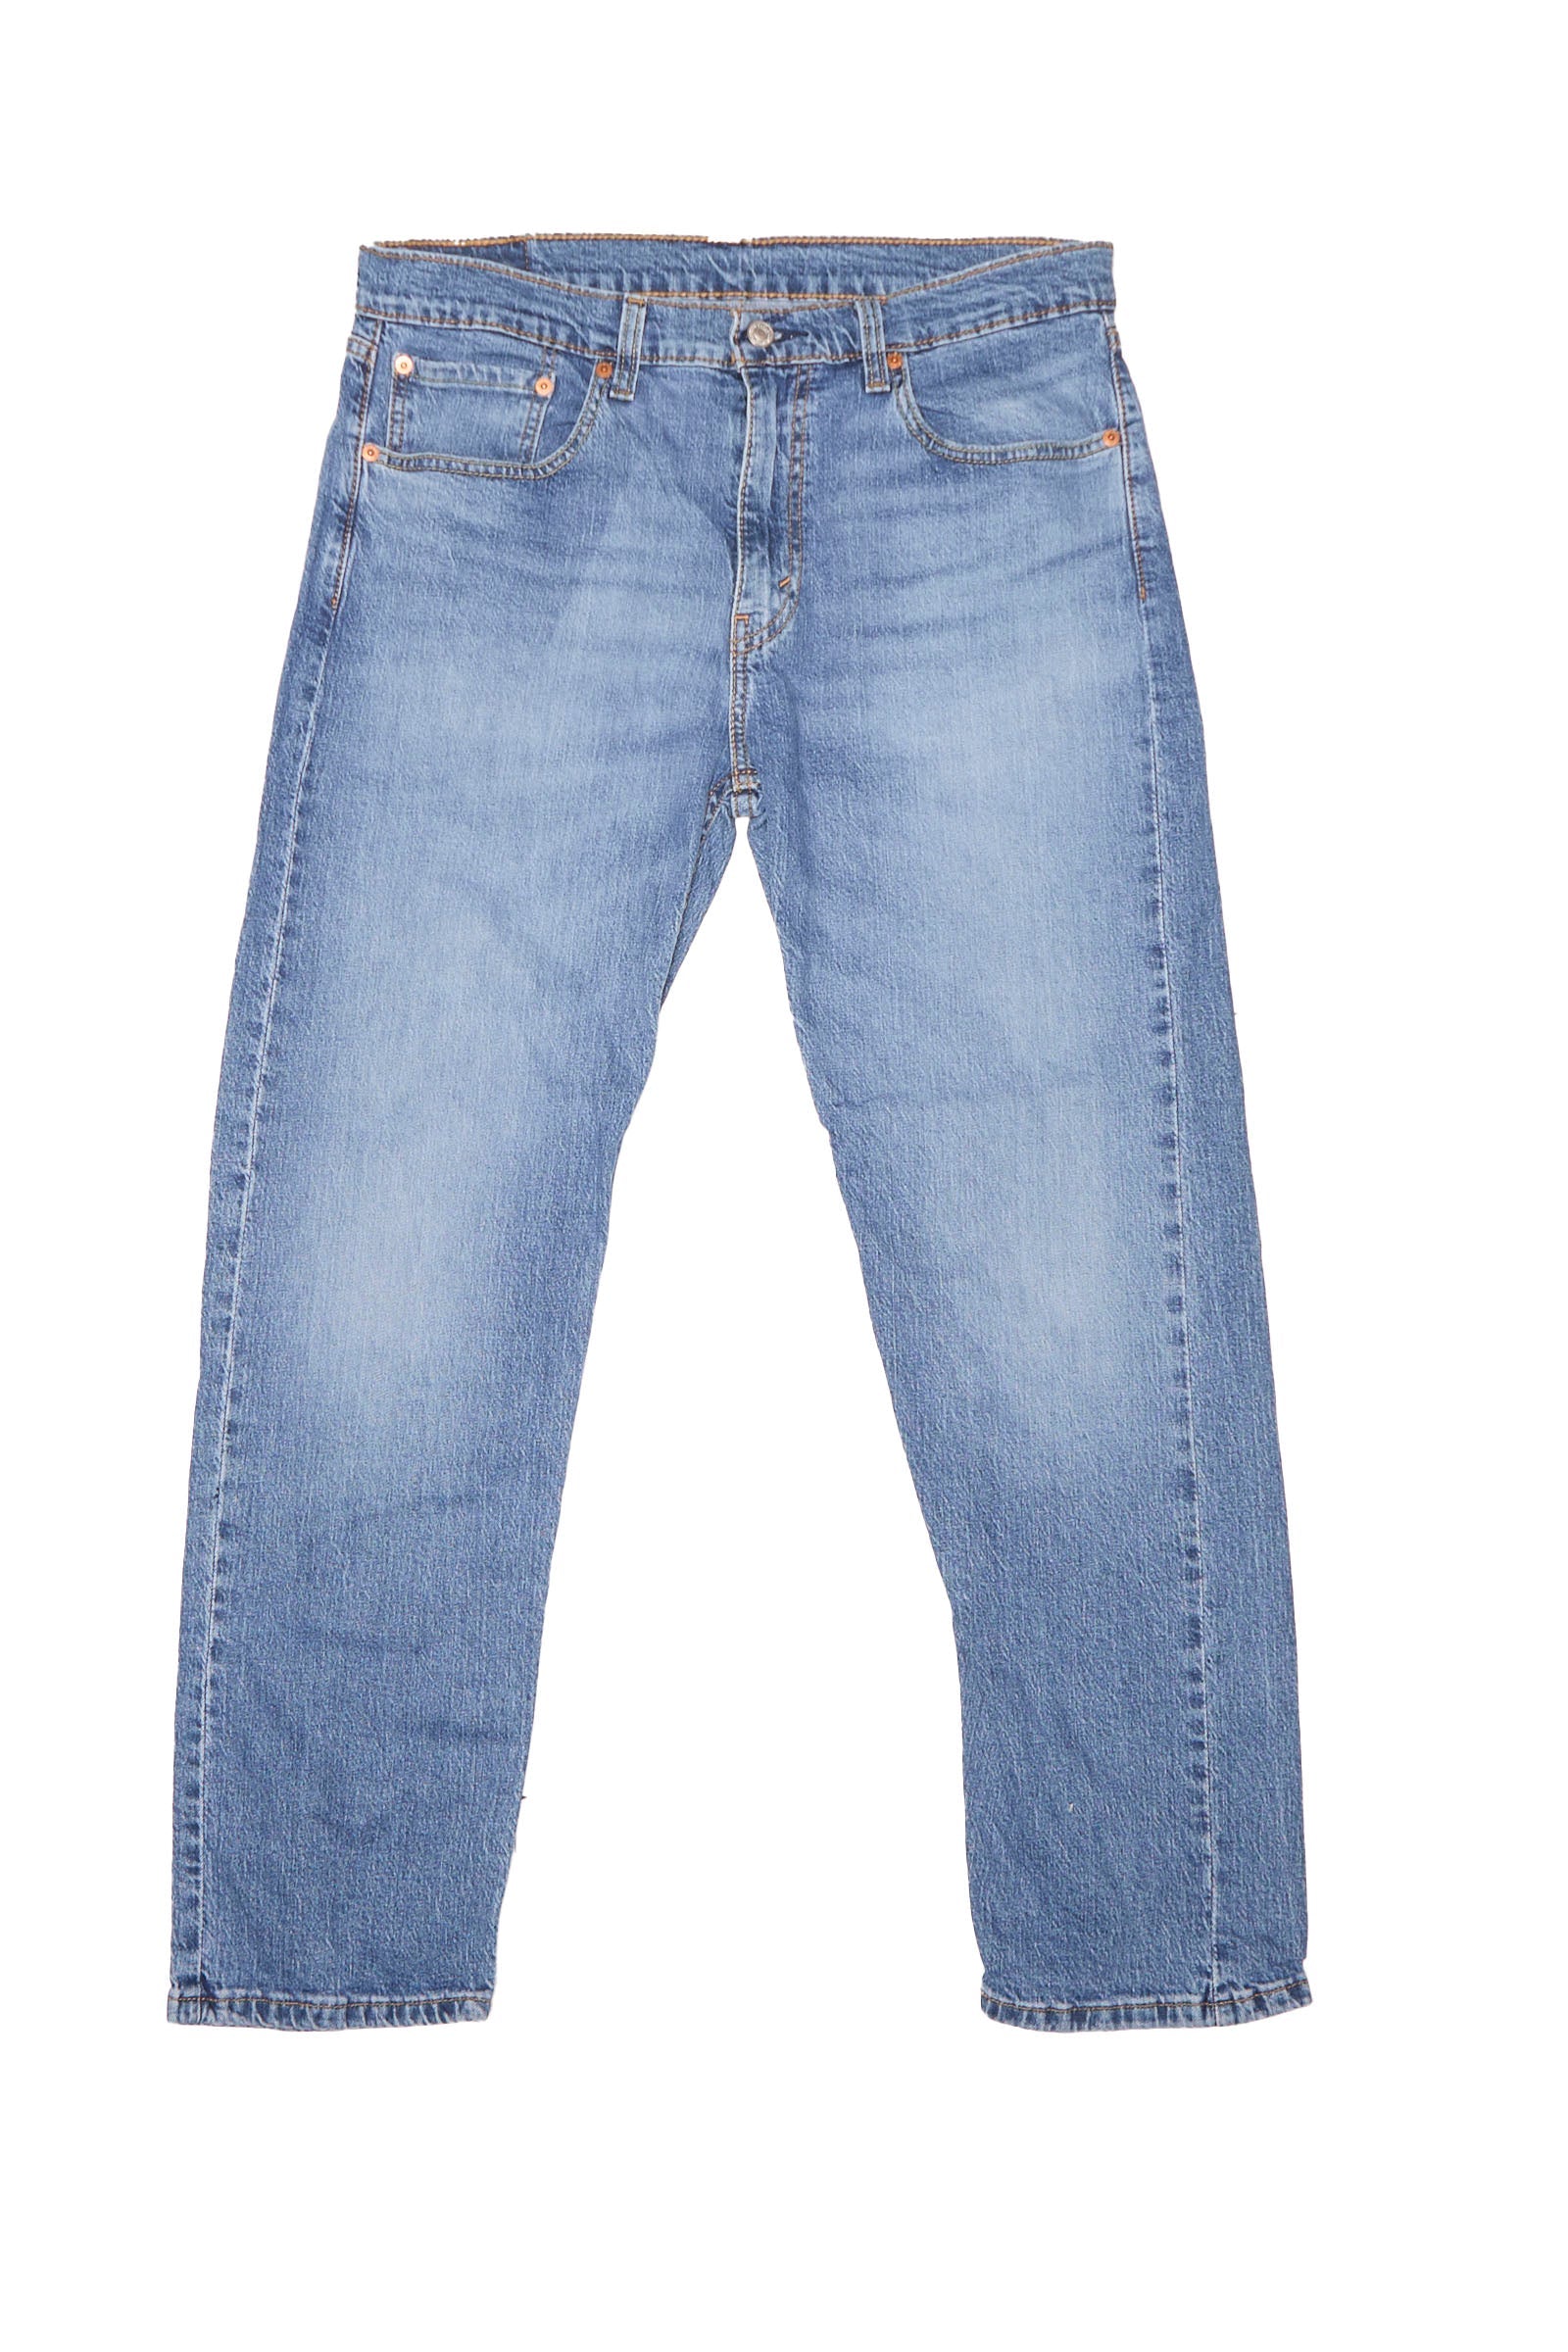 Zip Levis Straigh Cut Jeans - W34" L30"